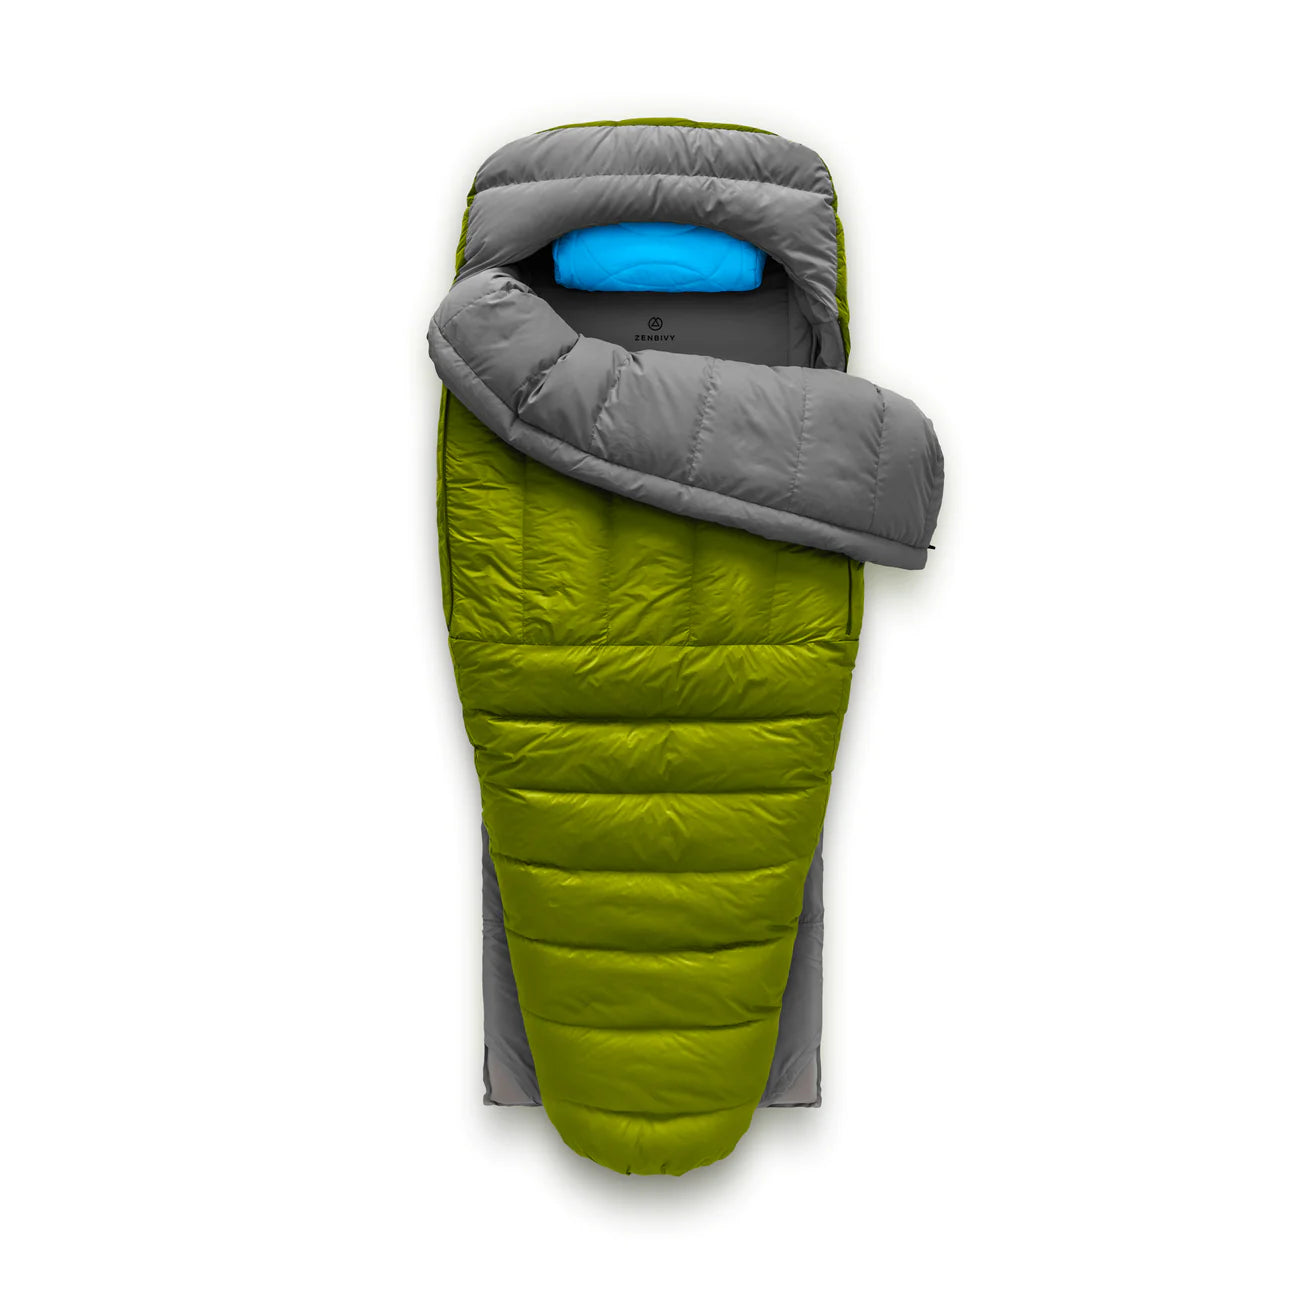 Zebivy Bed | Zenbivy Sleeping Bag Systems